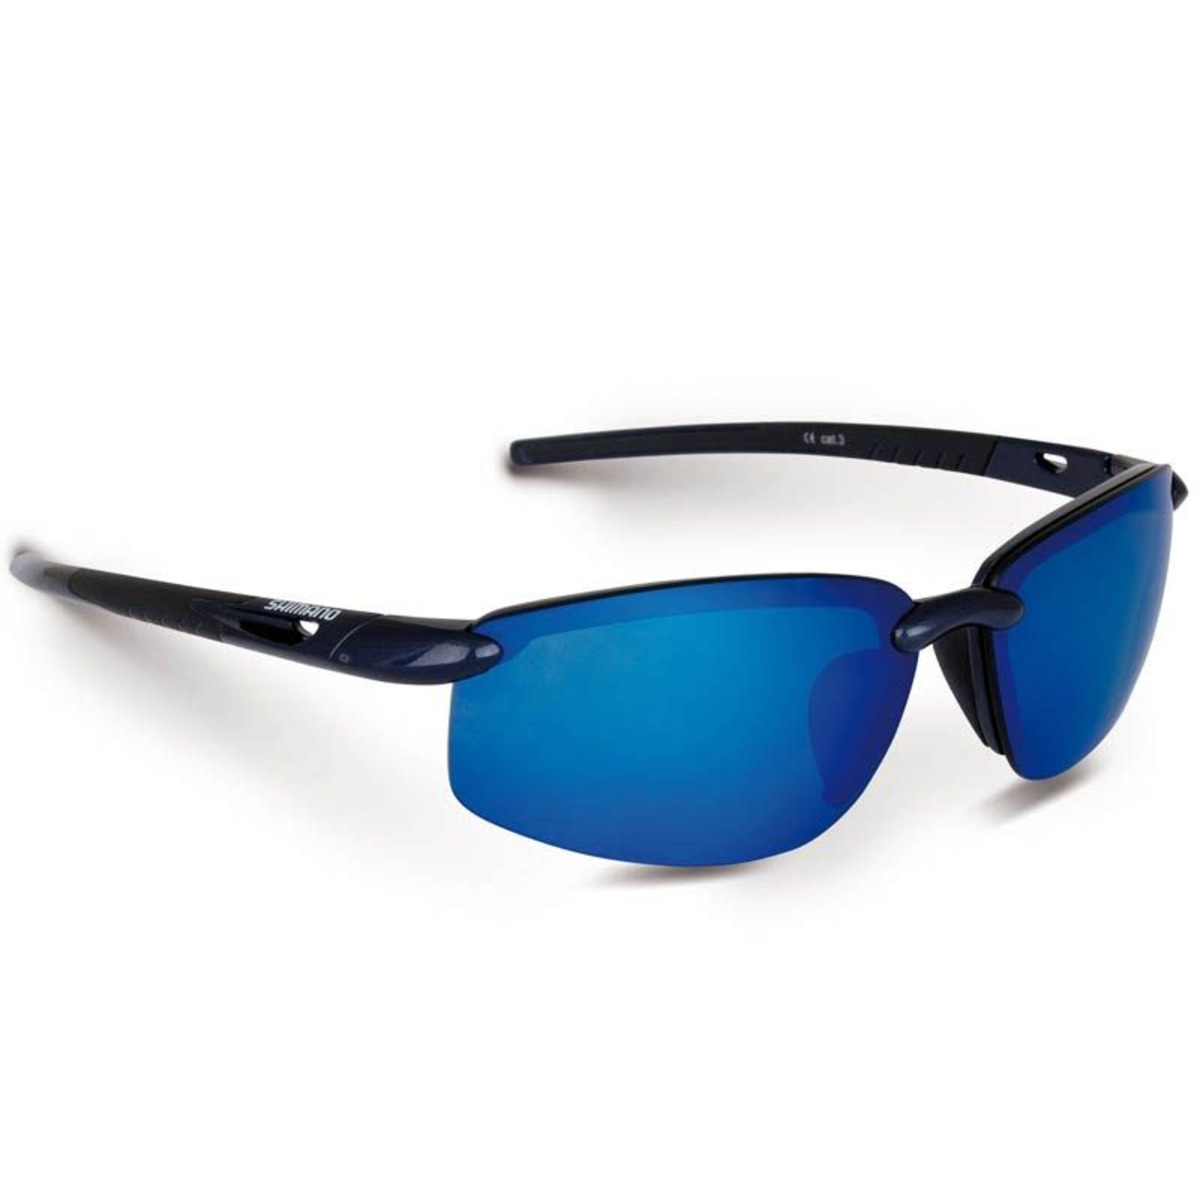 Shimano Sunglasses Tiagra 2 - Sunglasses Tiagra 2